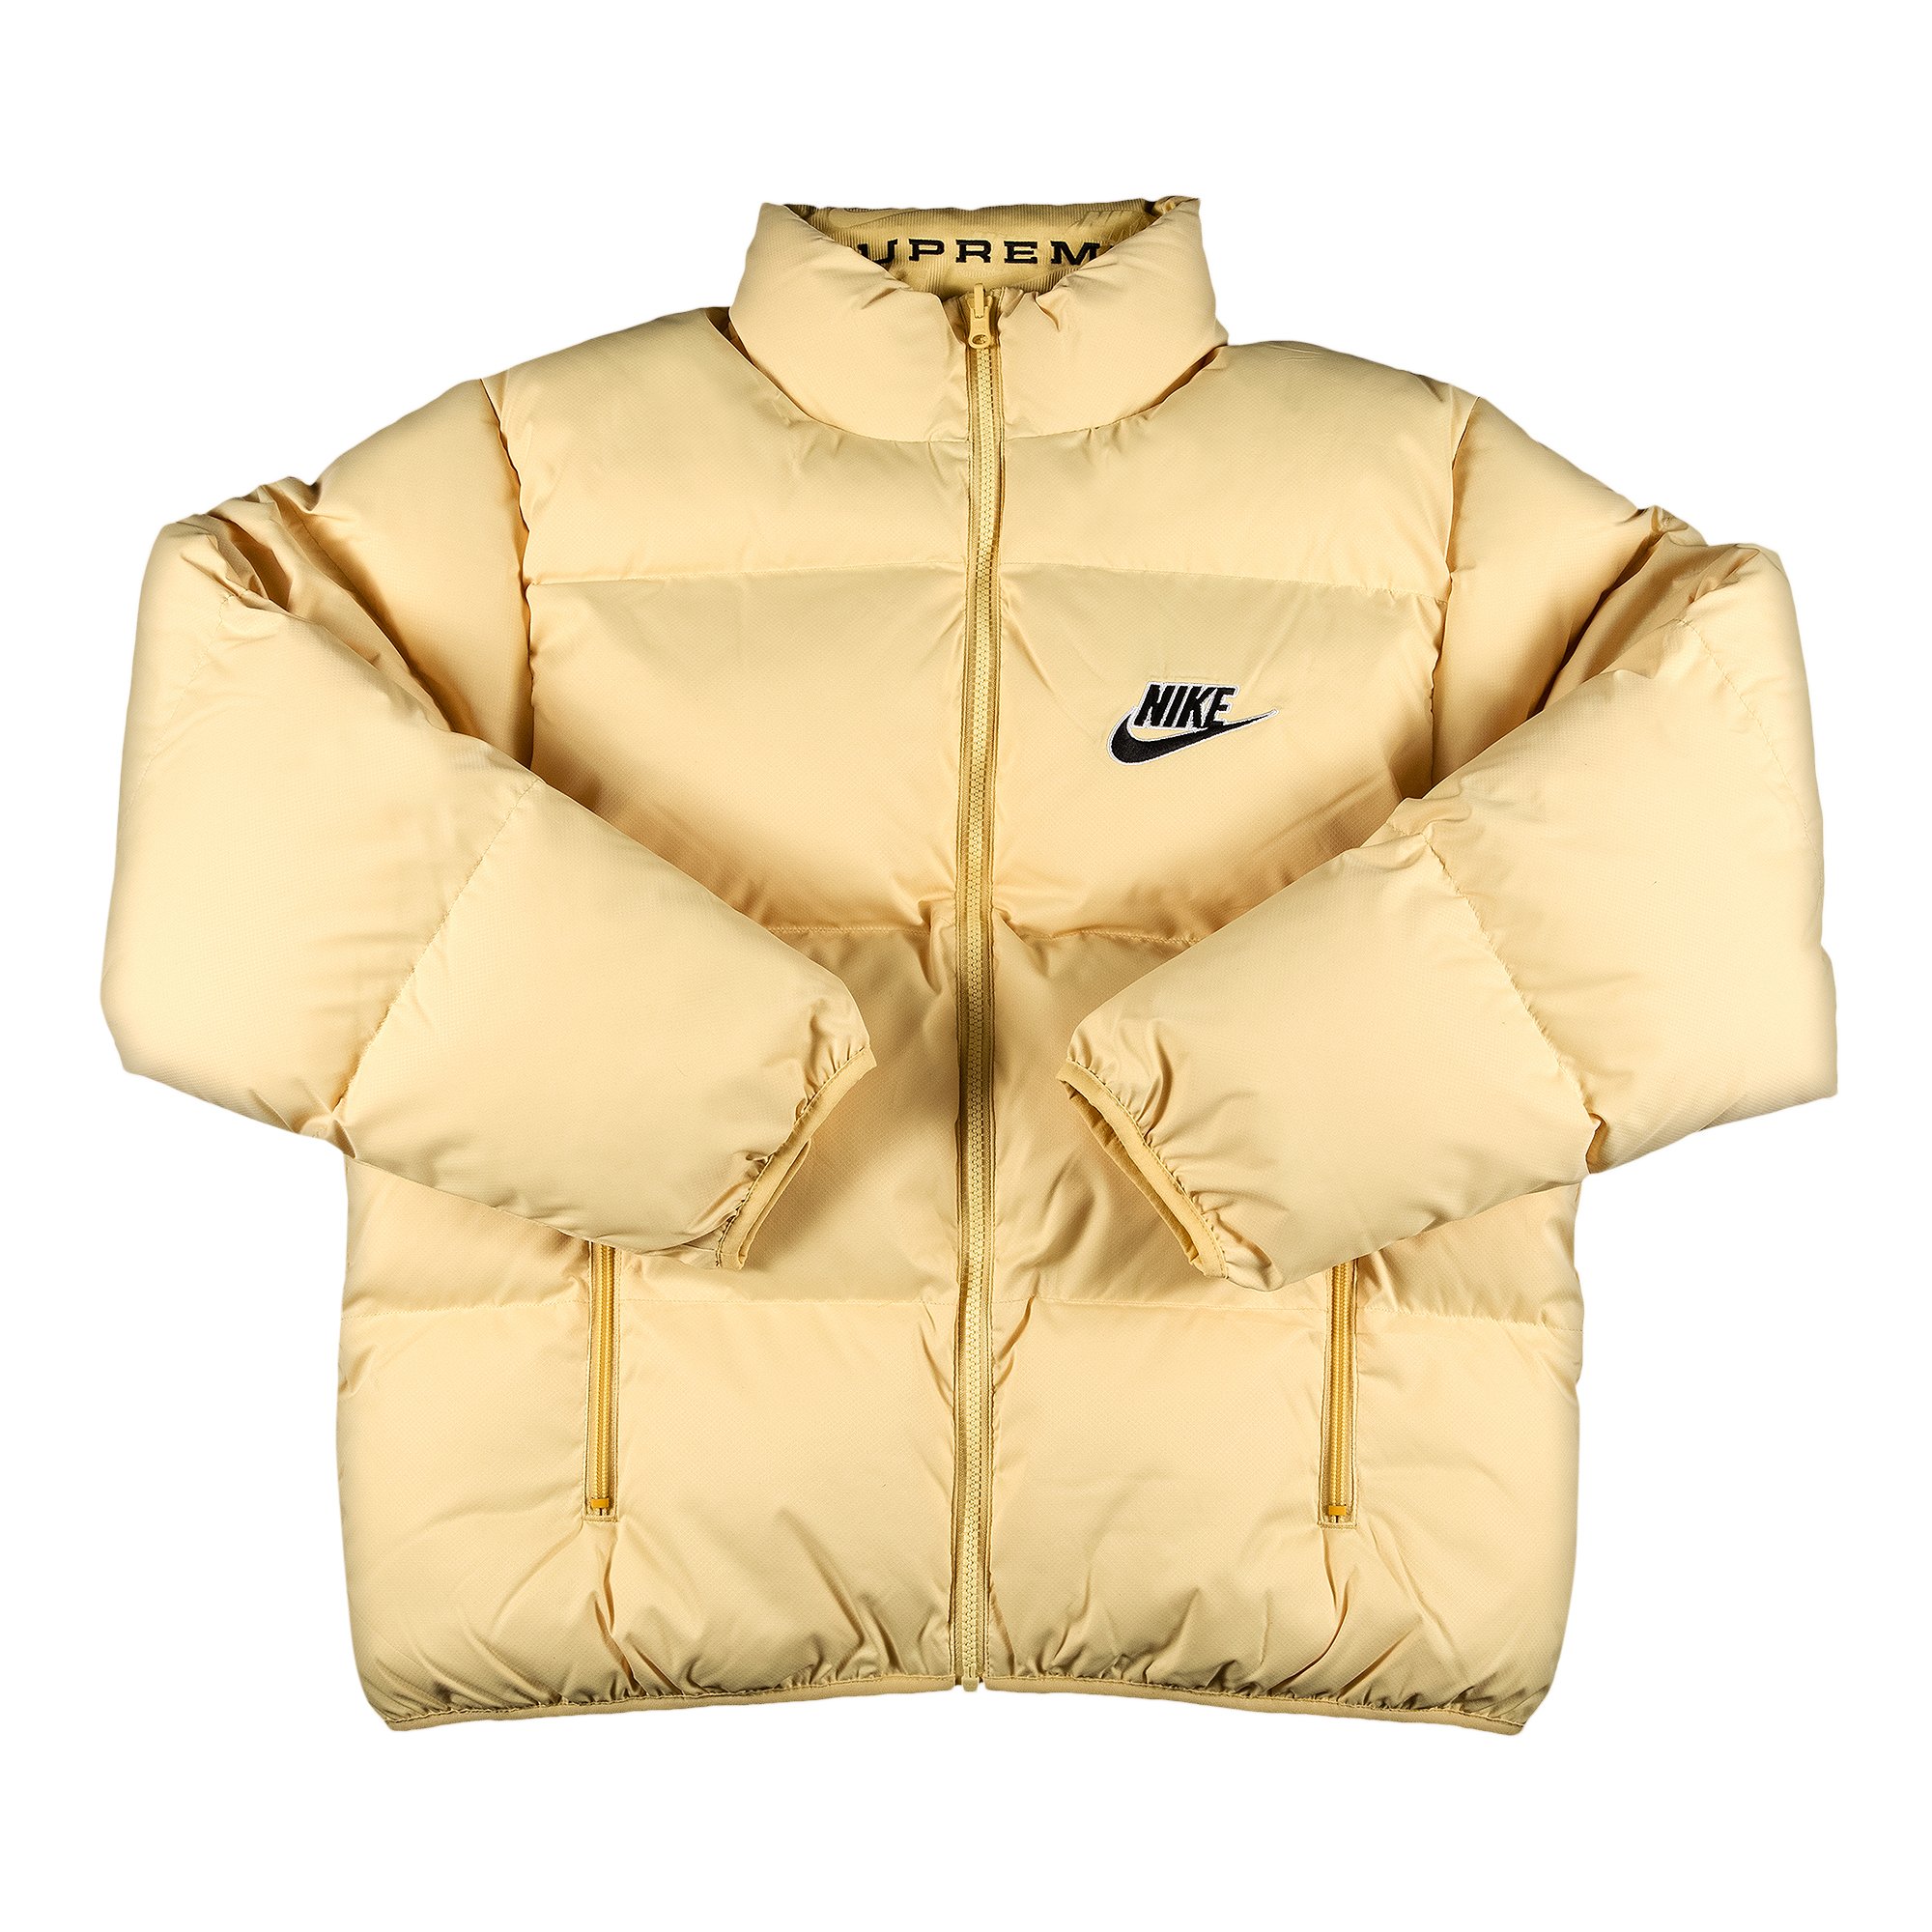 Supreme x Nike Reversible Puffy Jacket 'Pale Yellow'